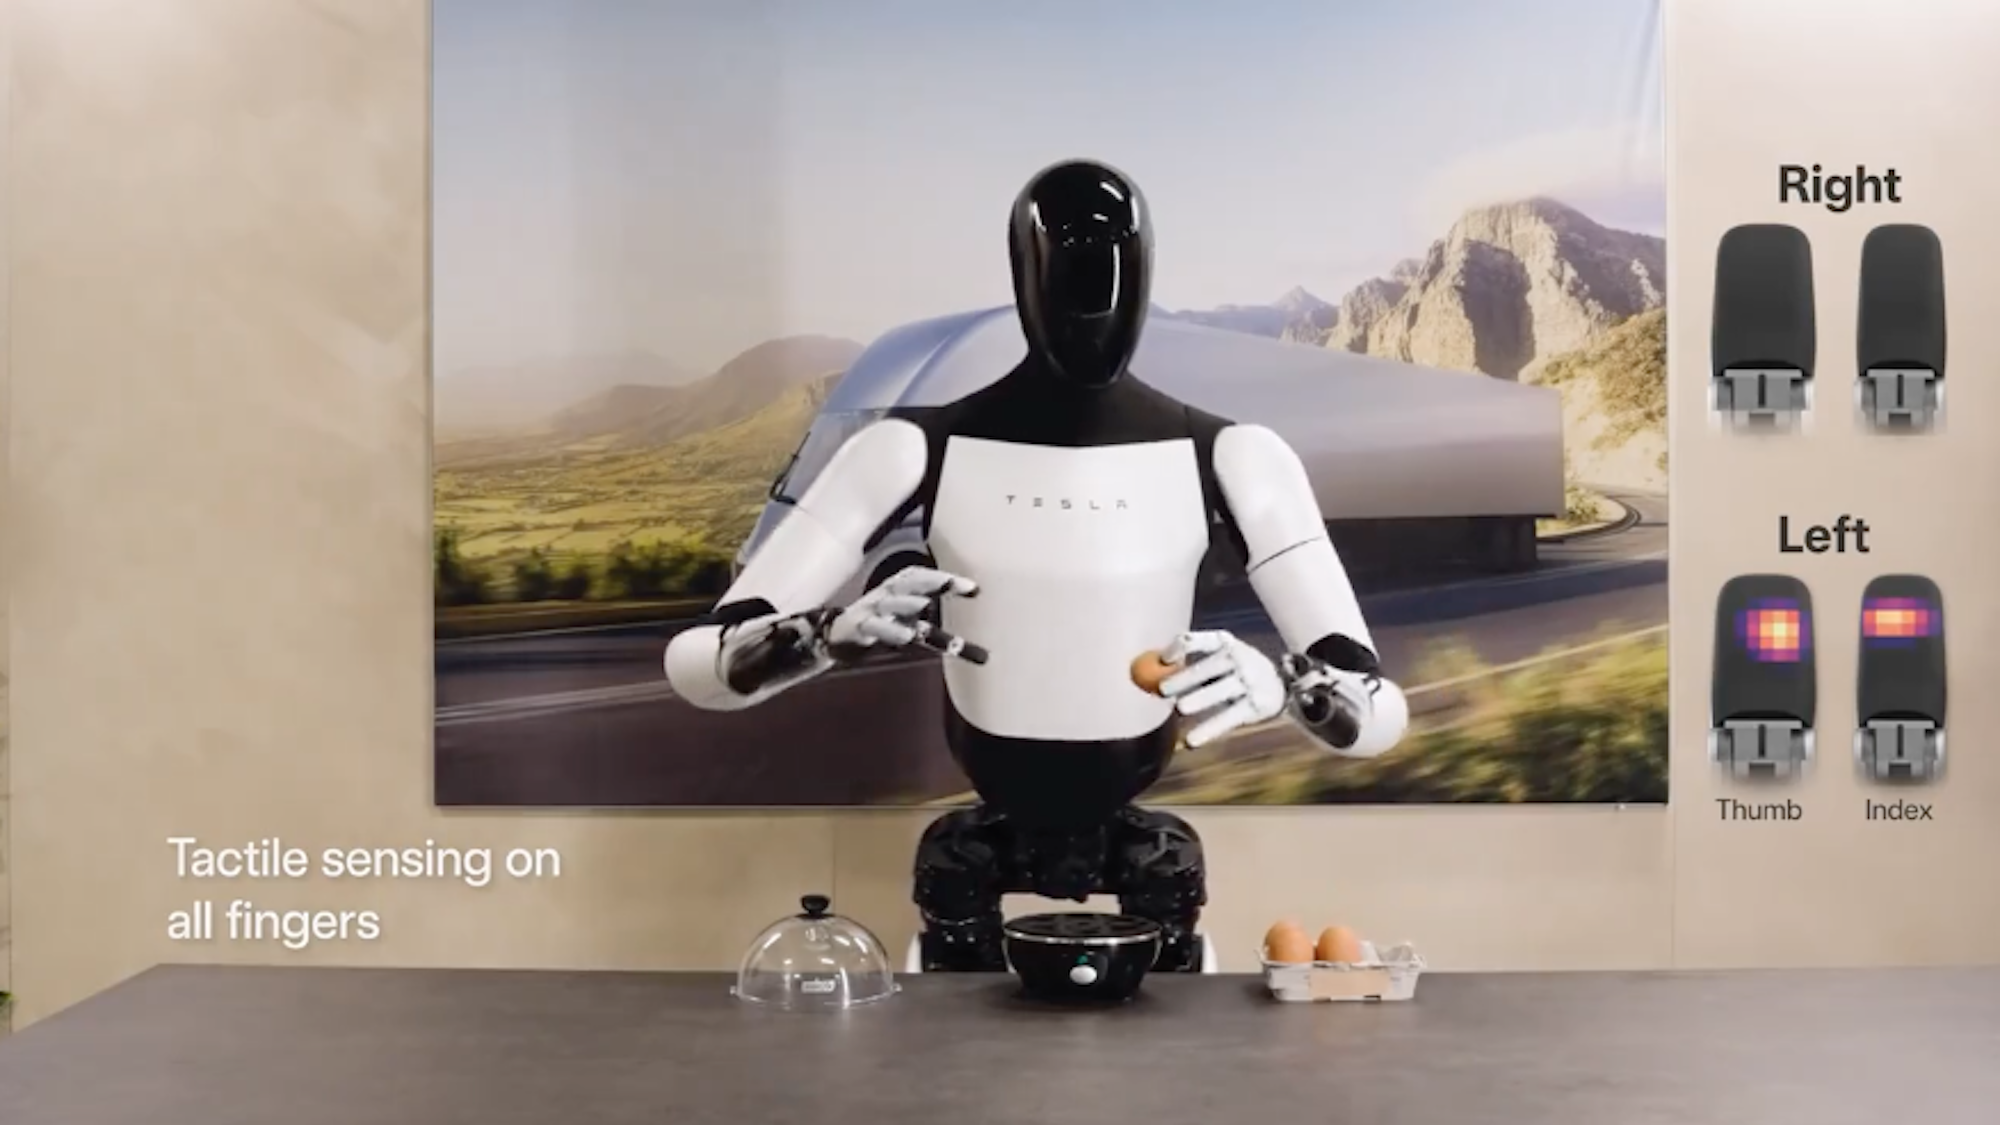 Tesla Optimus robot handling an egg in demo video